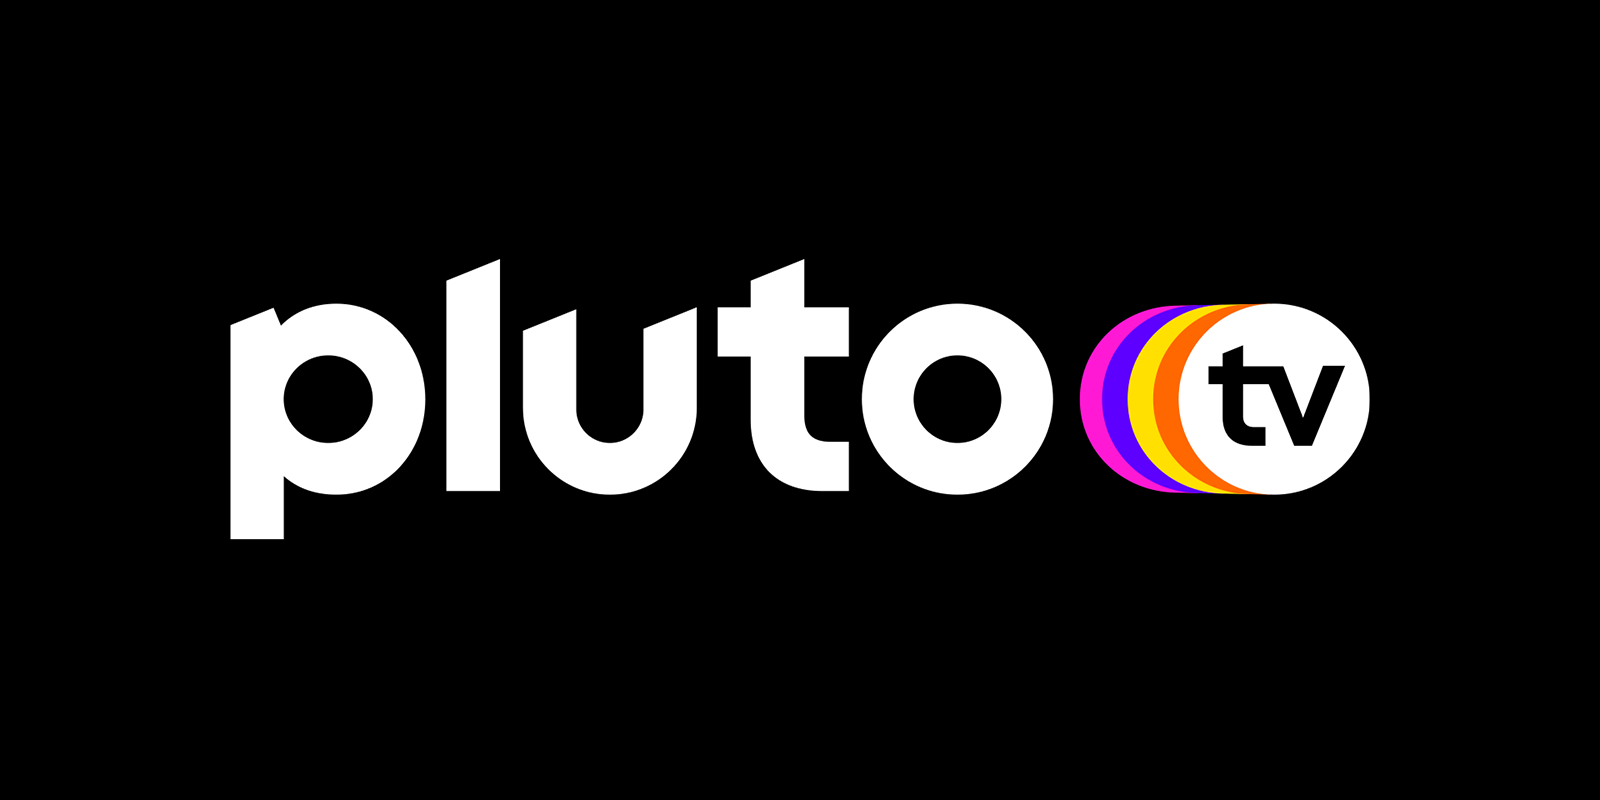 Pluto's TV new logo.